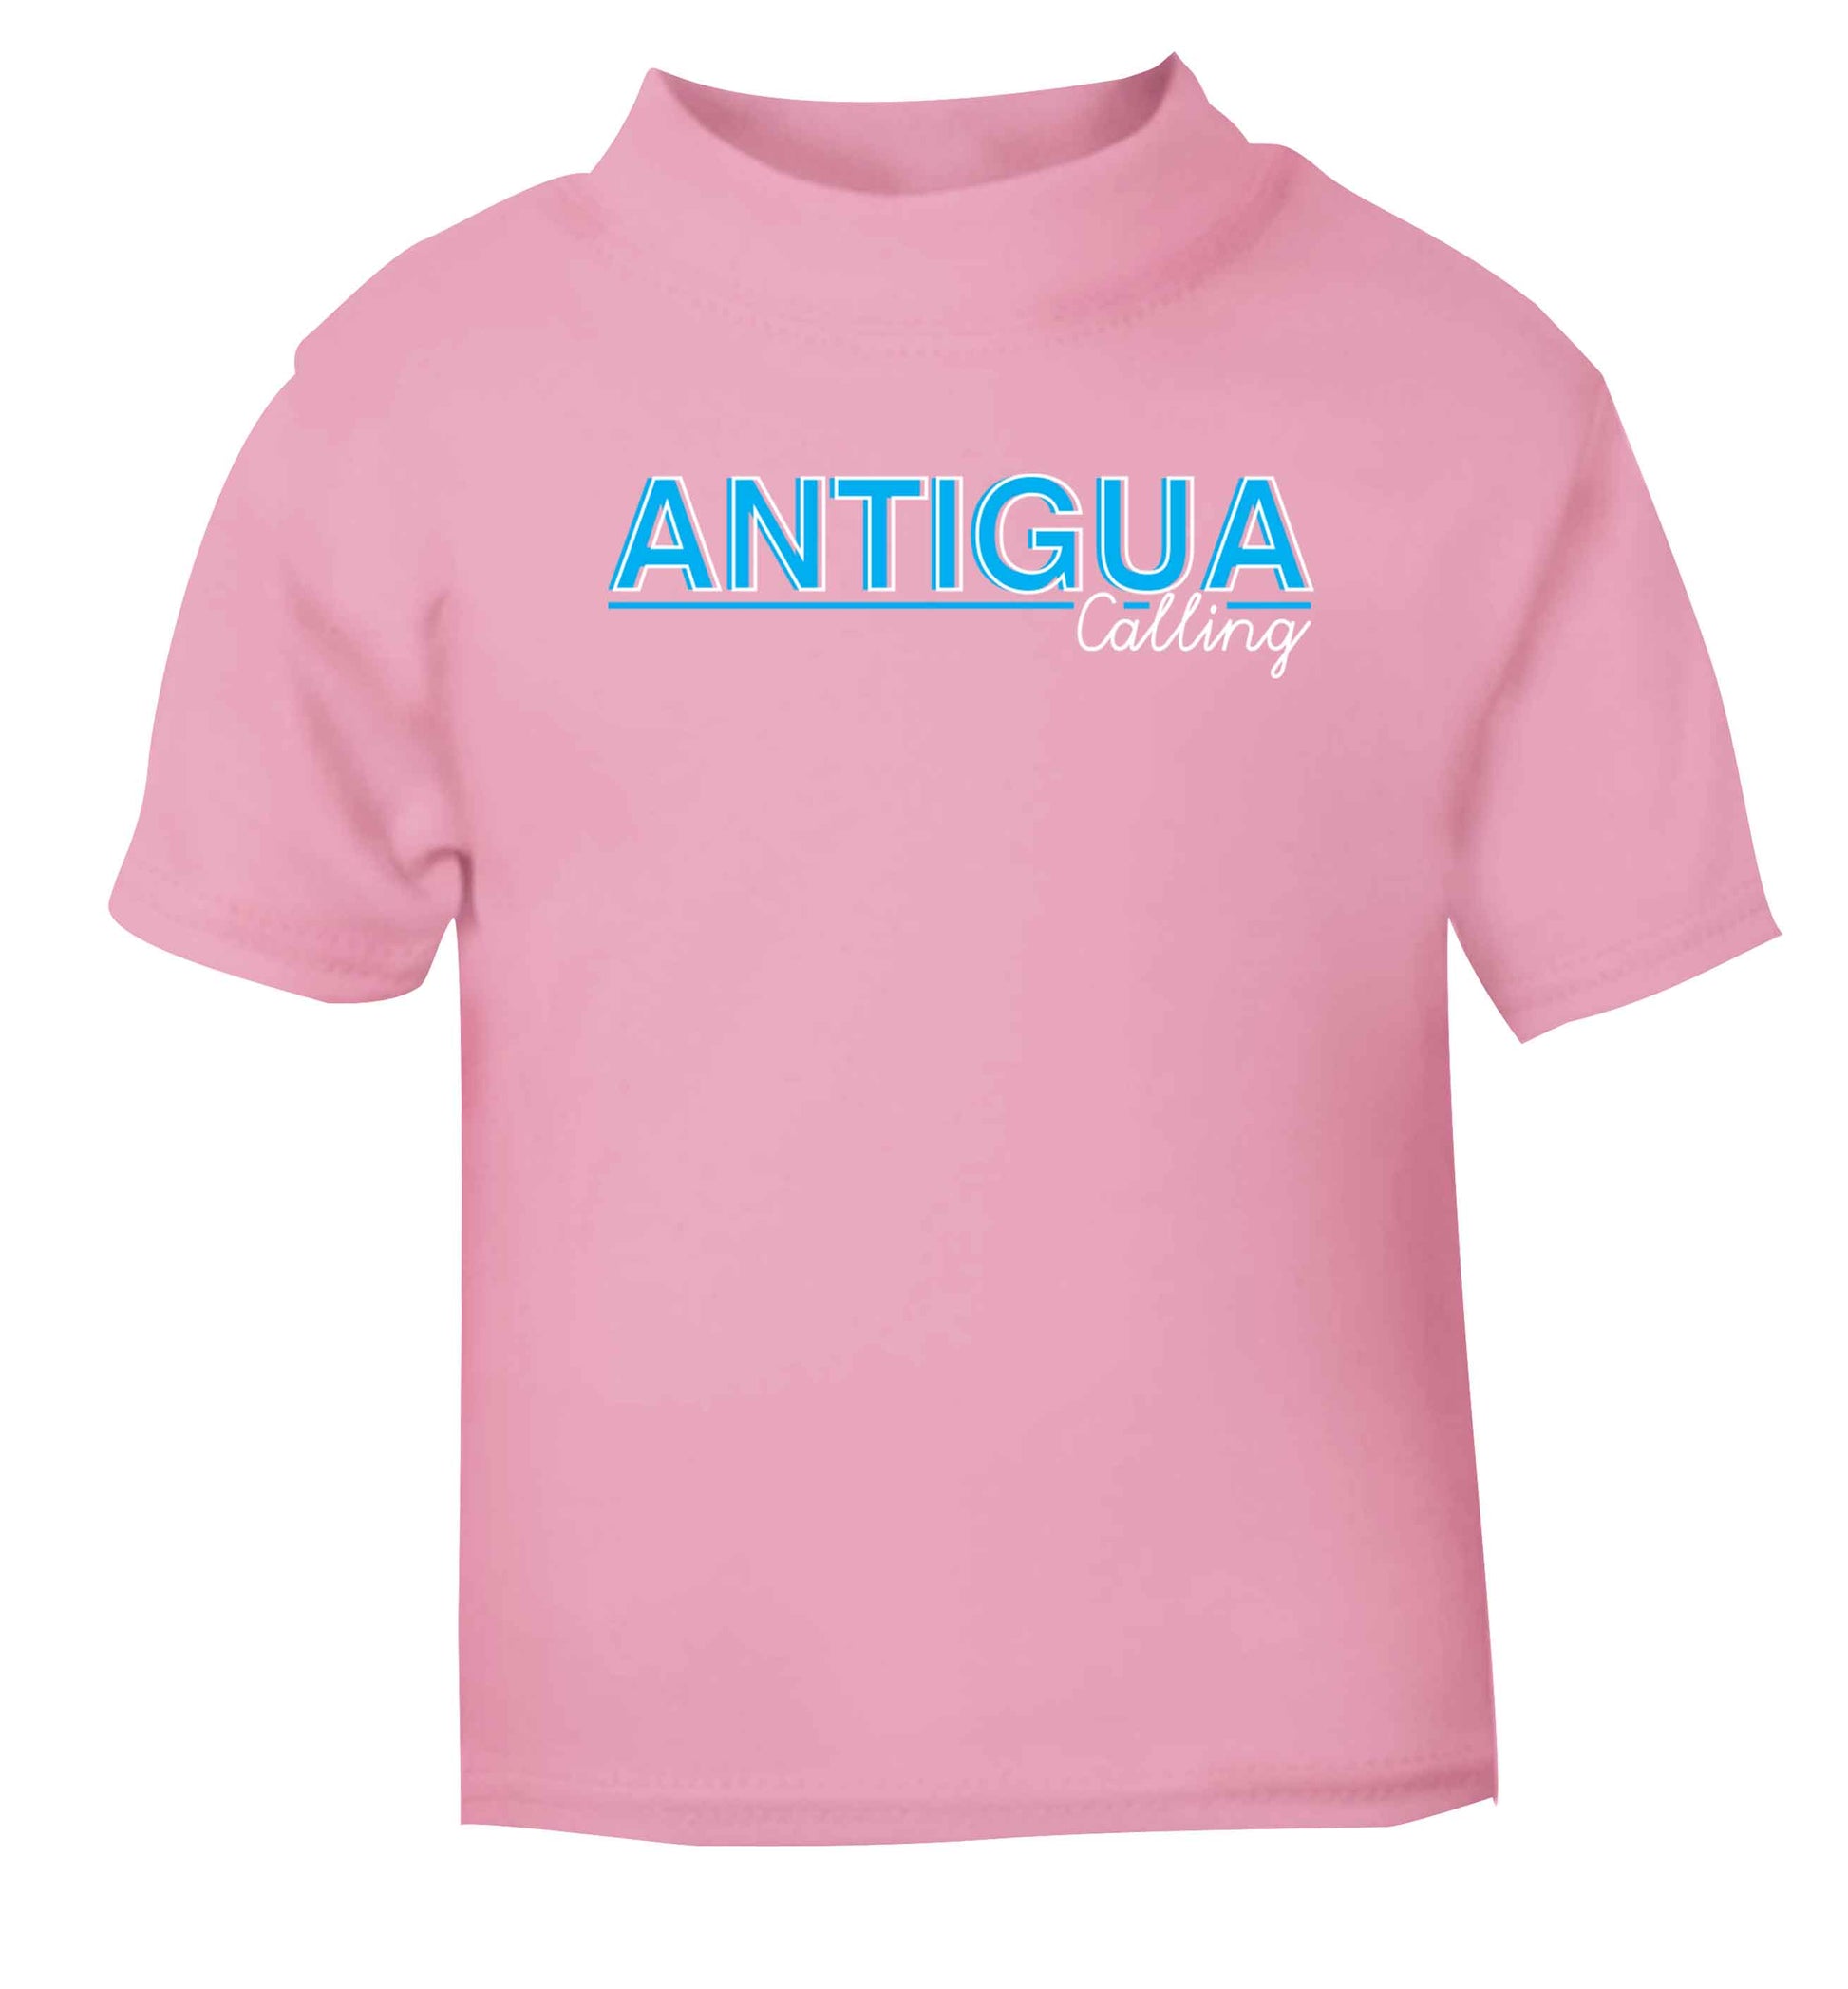 Antigua calling light pink Baby Toddler Tshirt 2 Years